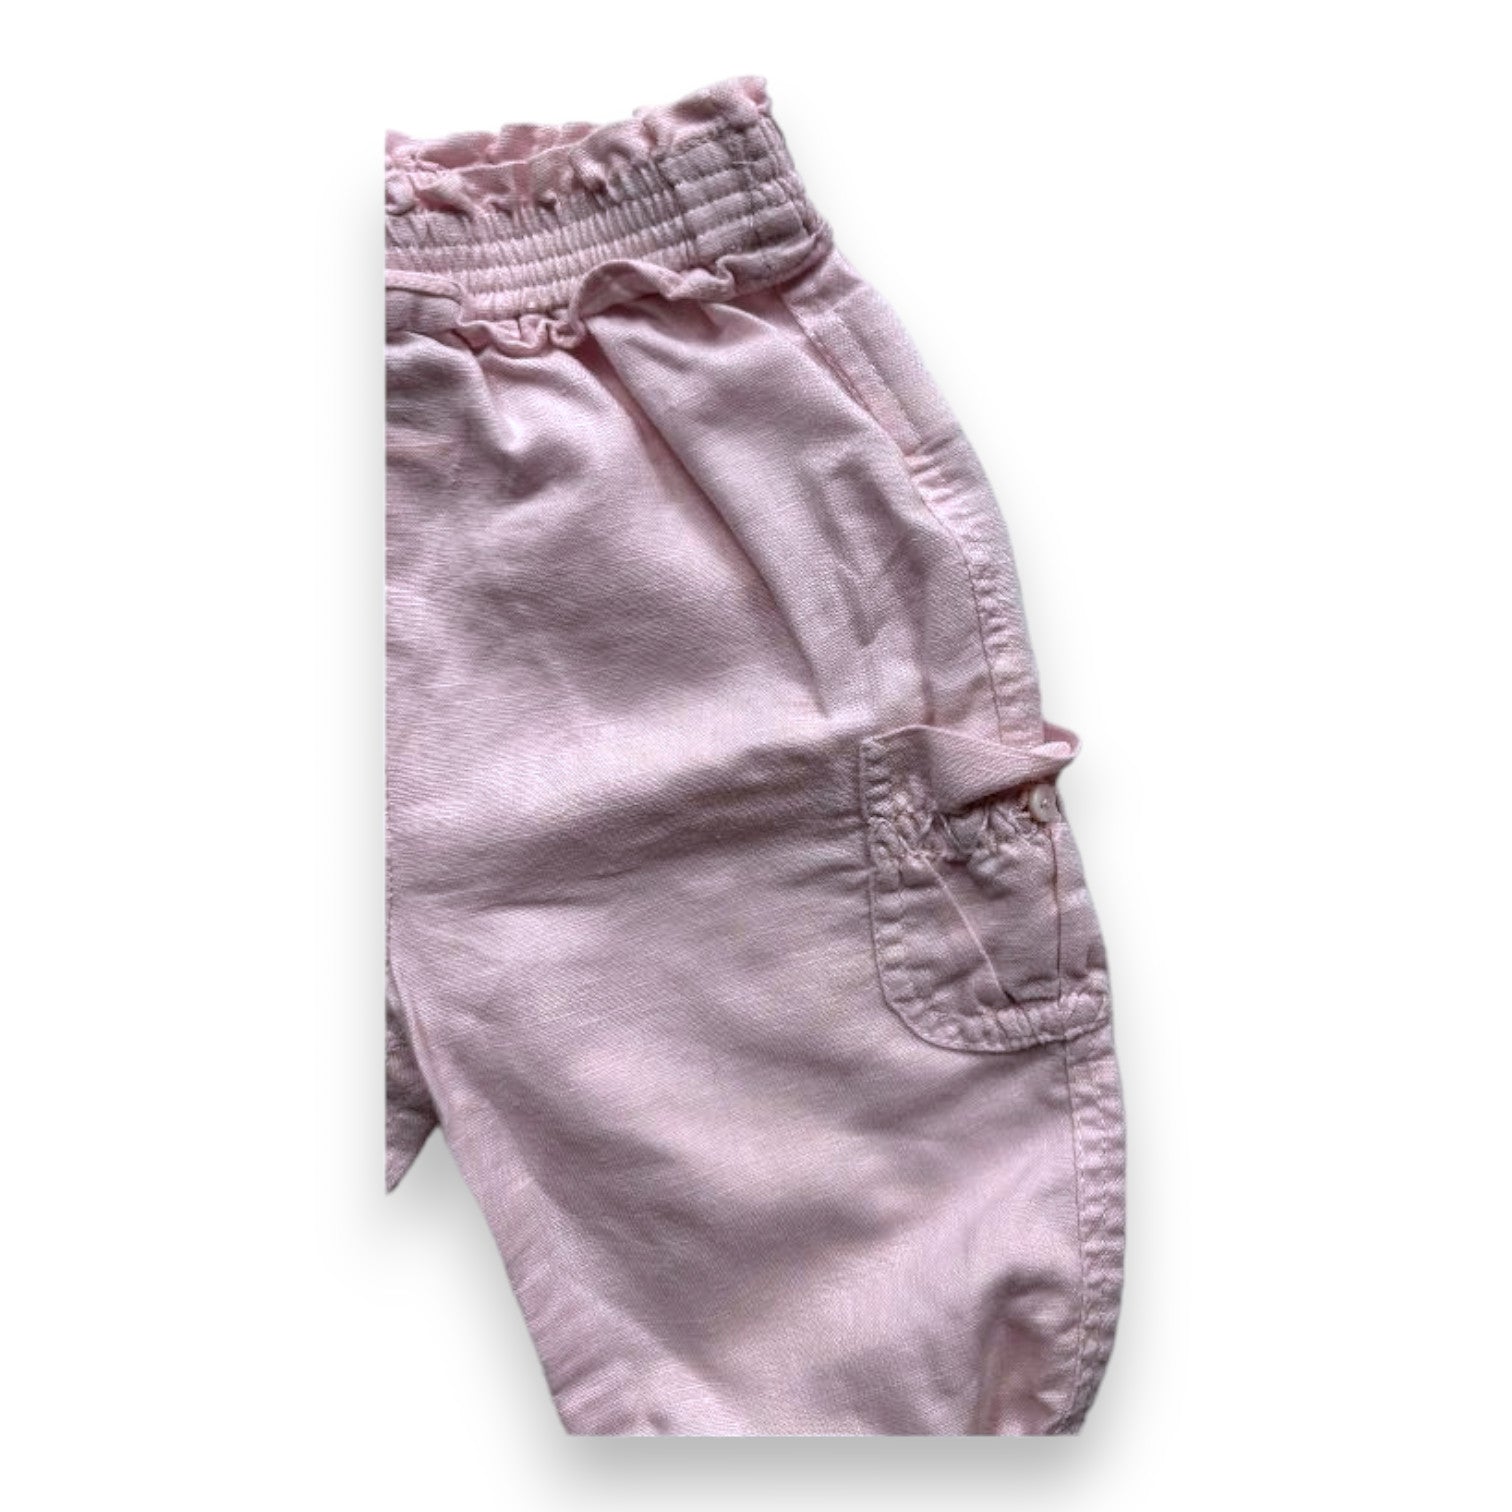 CYRILLUS - Pantalon rose avec poches - 3 mois